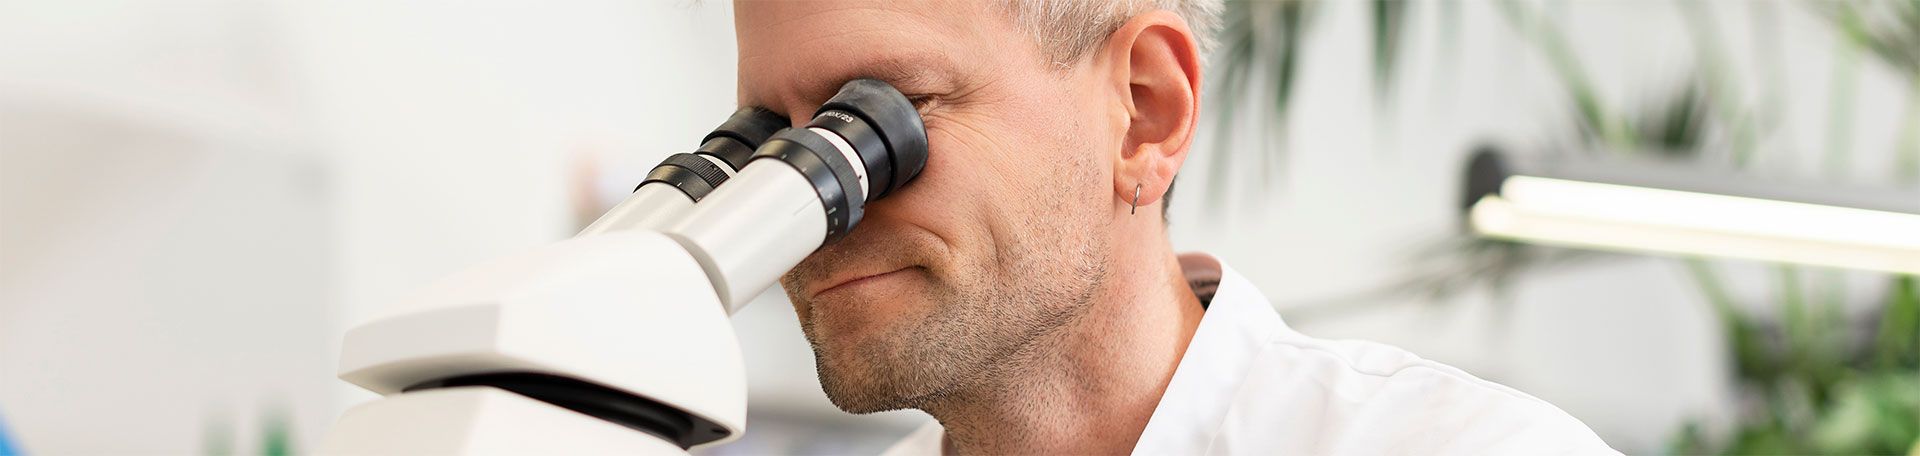 Illustrationsfoto Kieferorthopädie: Arzt schaut durch Mikroskop